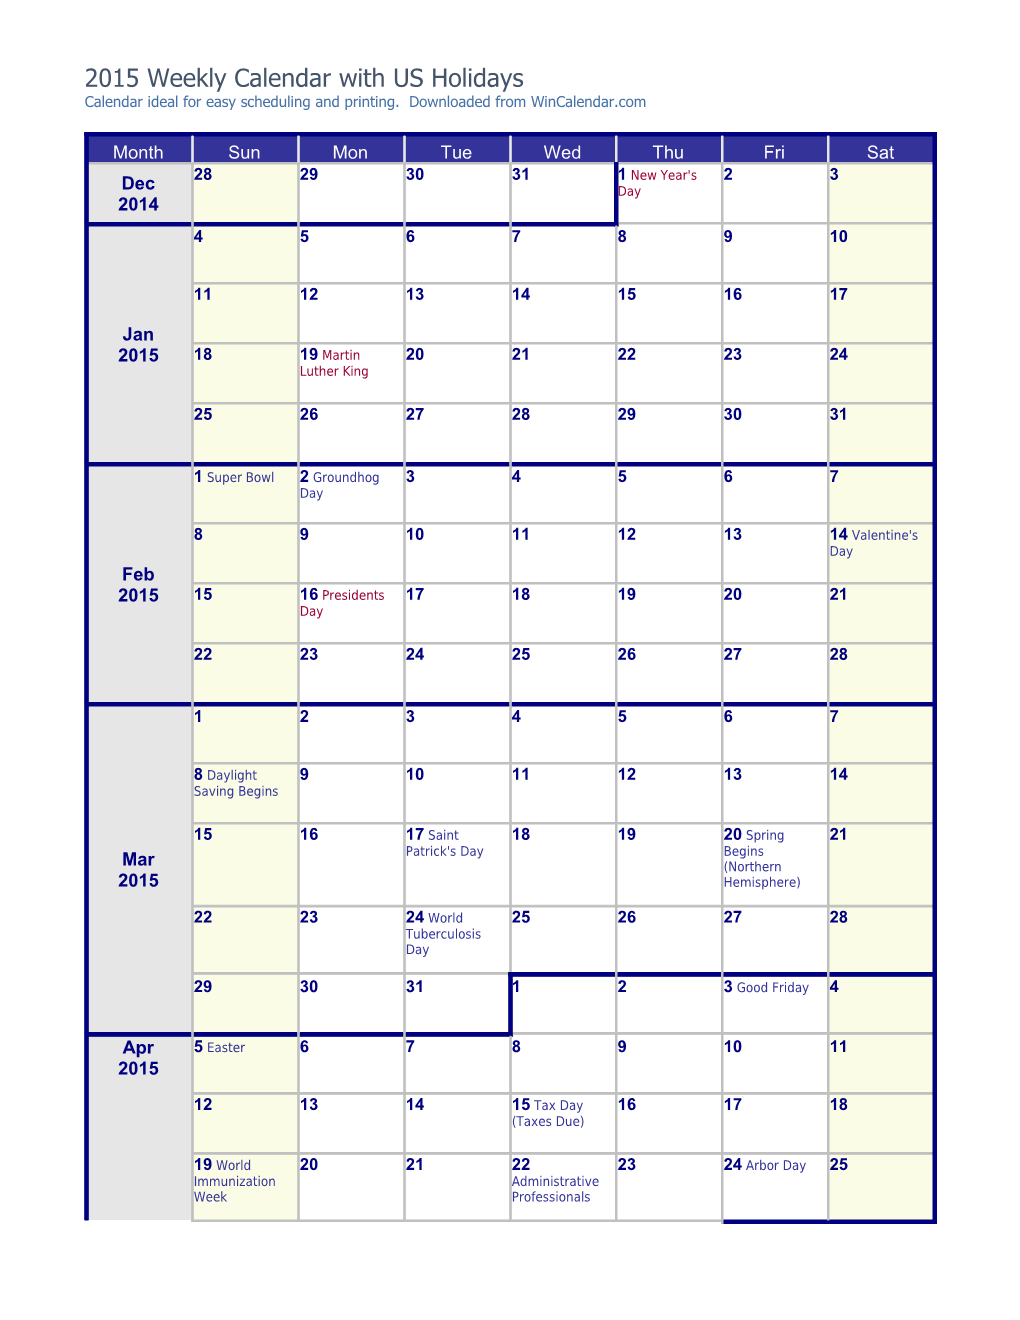 2015 Weekly Calendar with Holidays from Wincalendar.Com